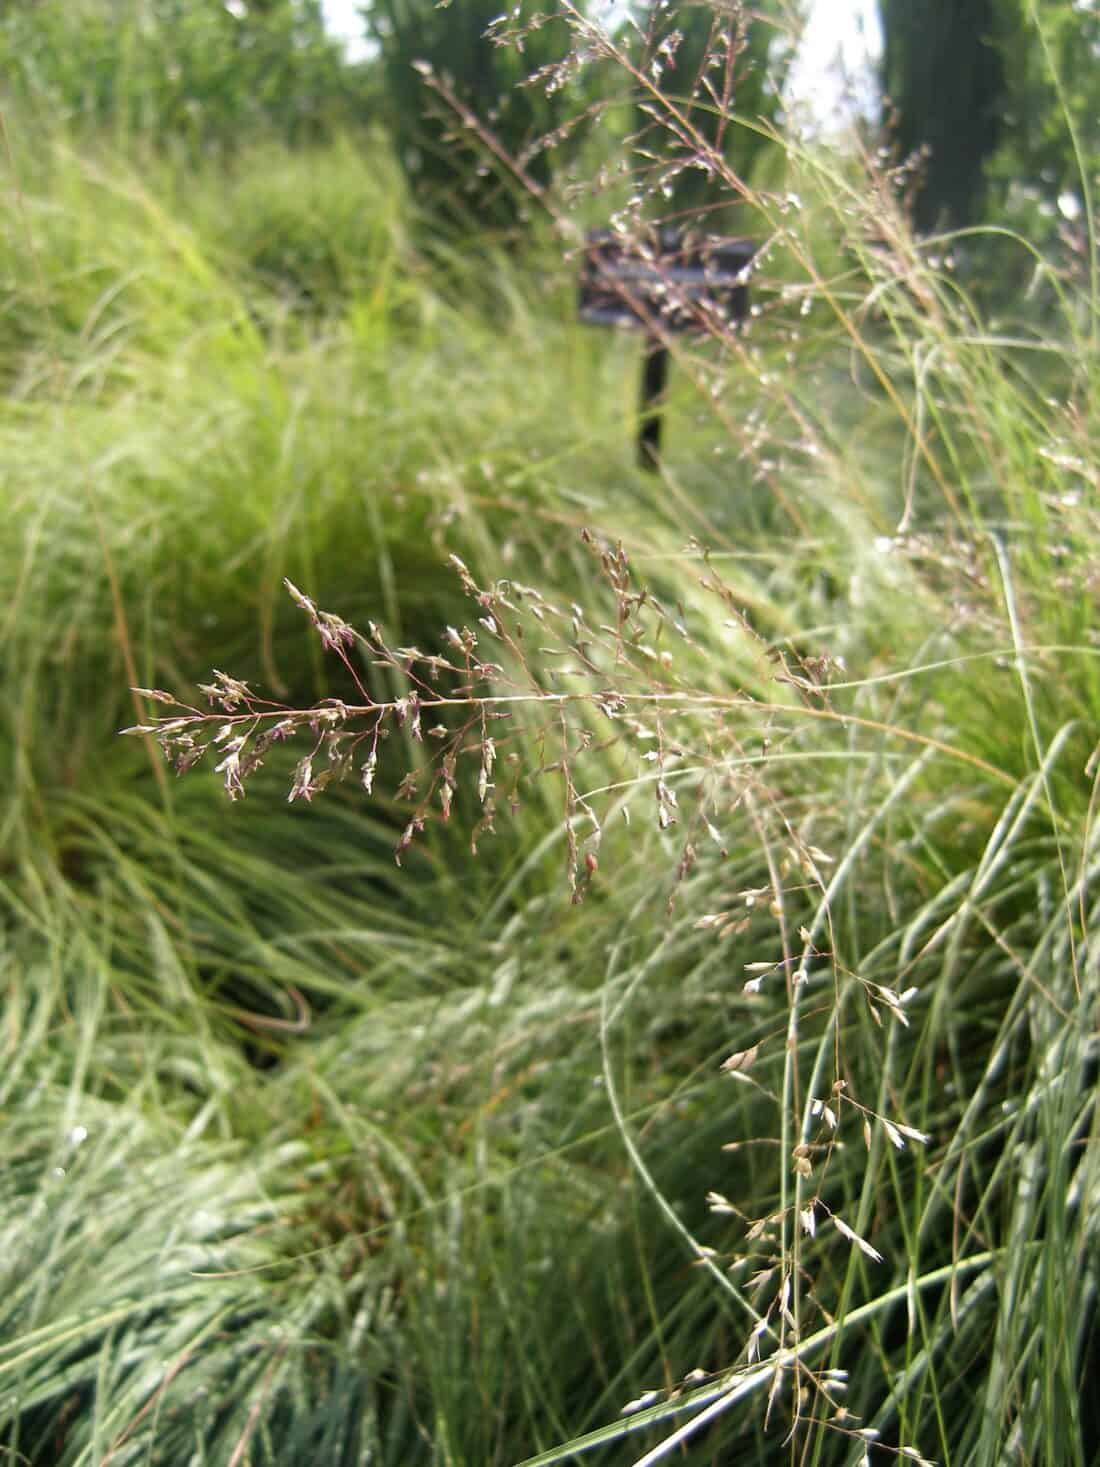 Sporobolus heterolepis - Prairie Dropseed Grass in the Ornamental Grass Garden at the Denver Botanic Garden